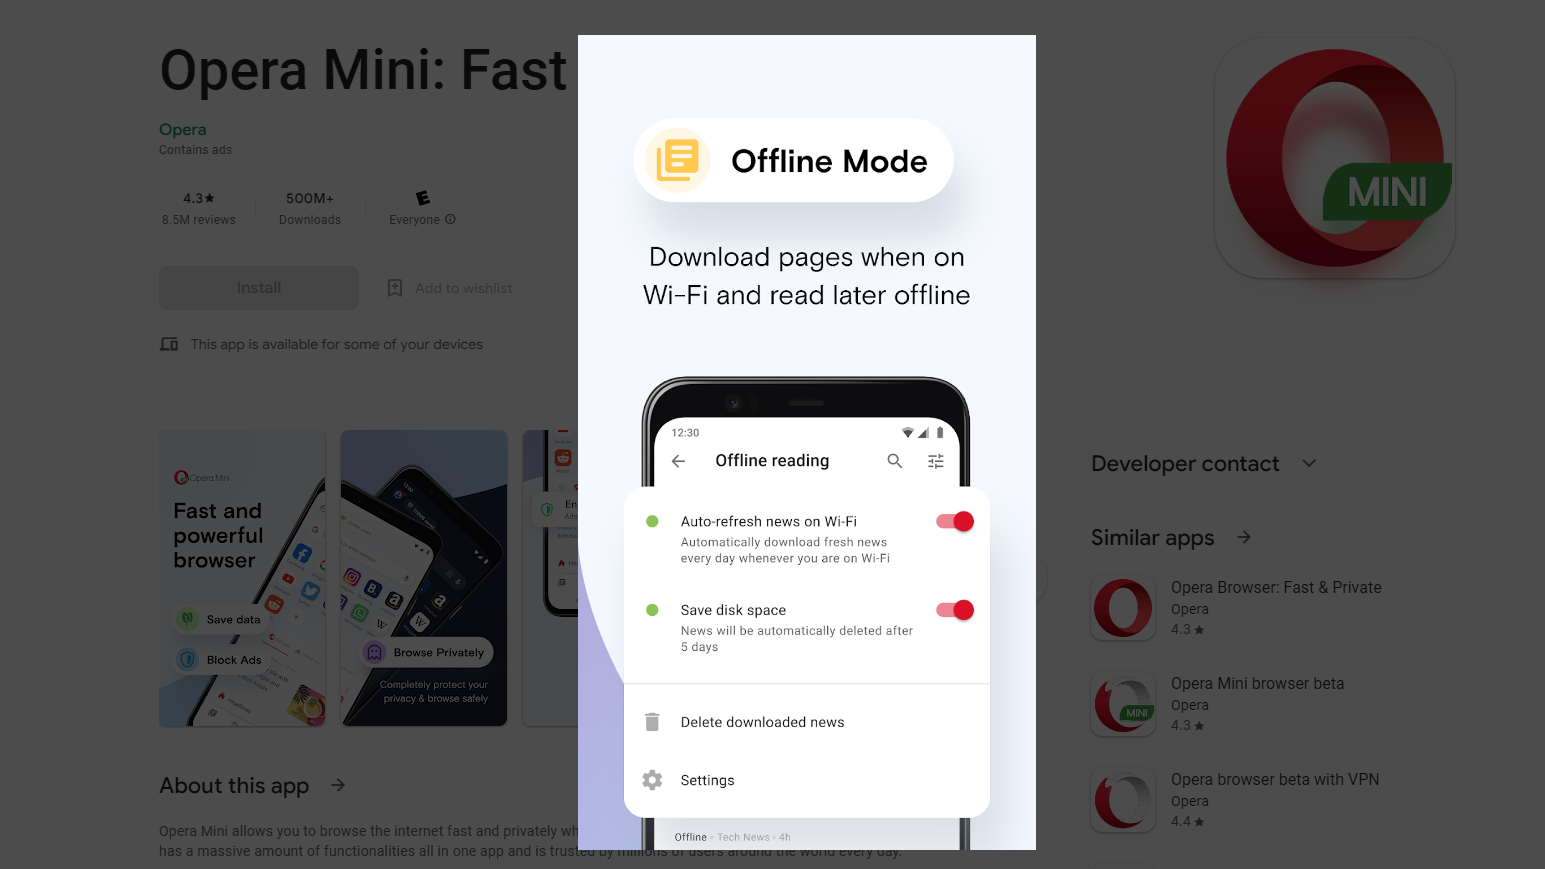 Opera Mini offline